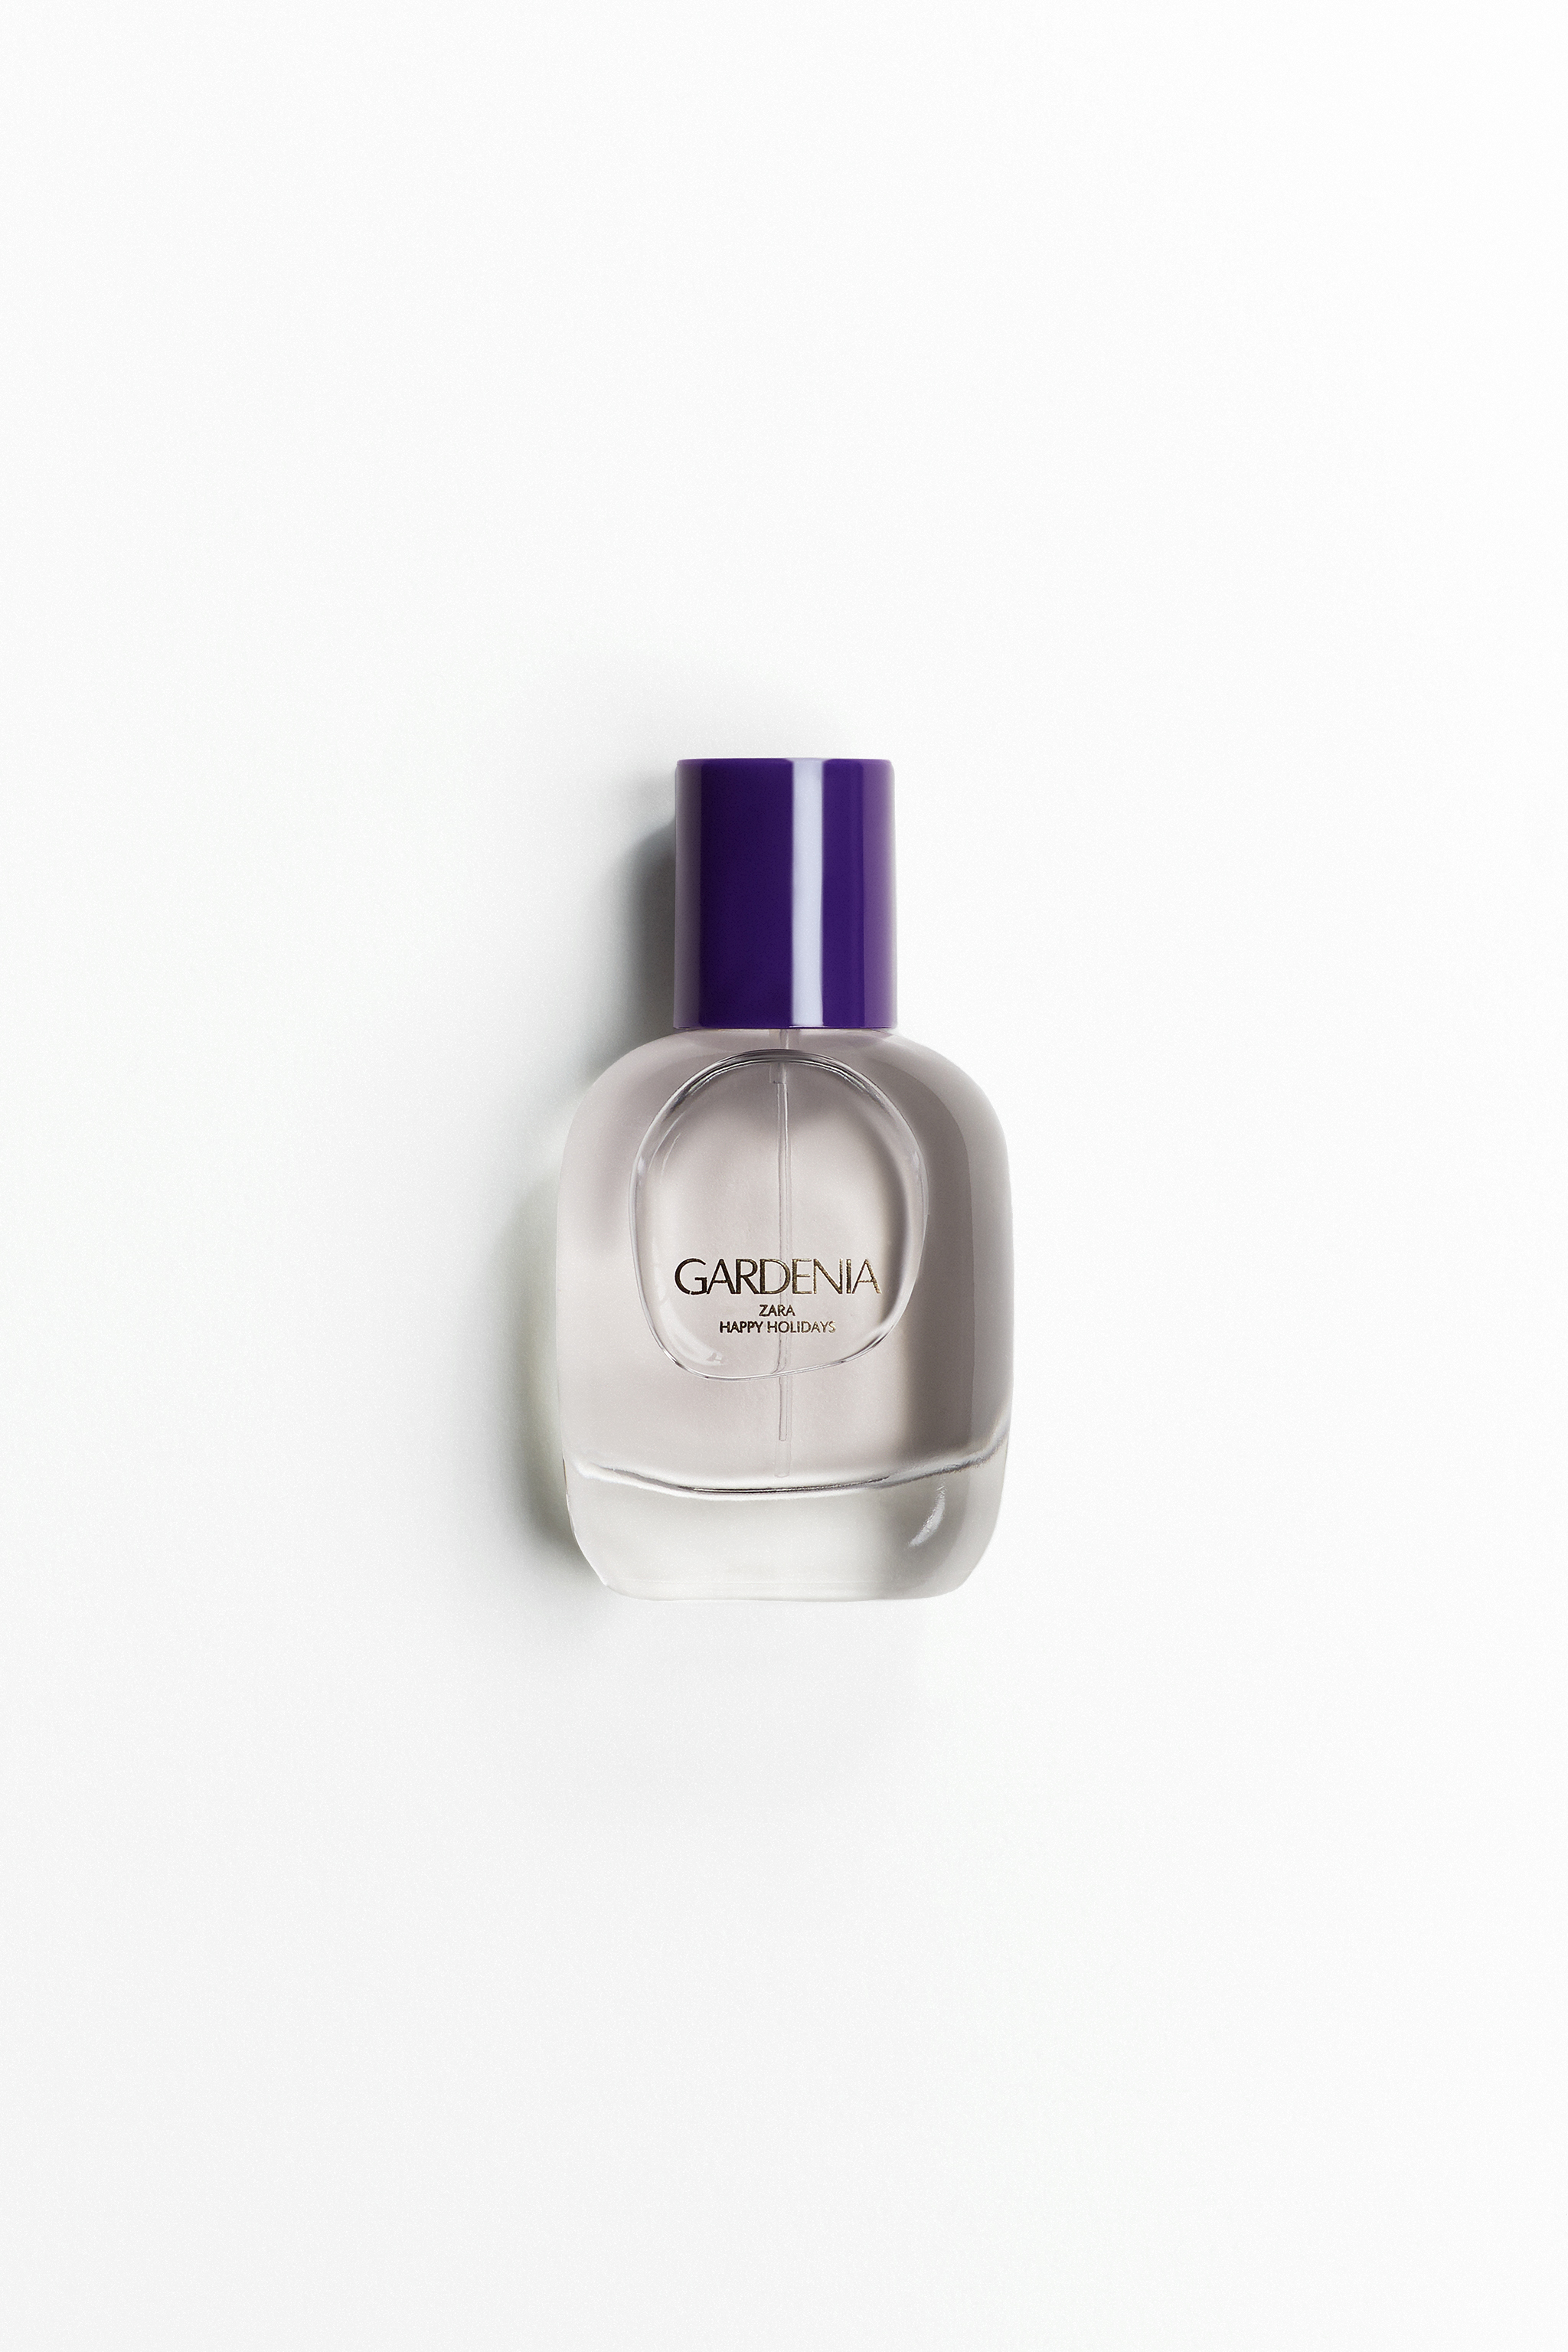 Hipster Oud Zara perfume - a new fragrance for women 2022